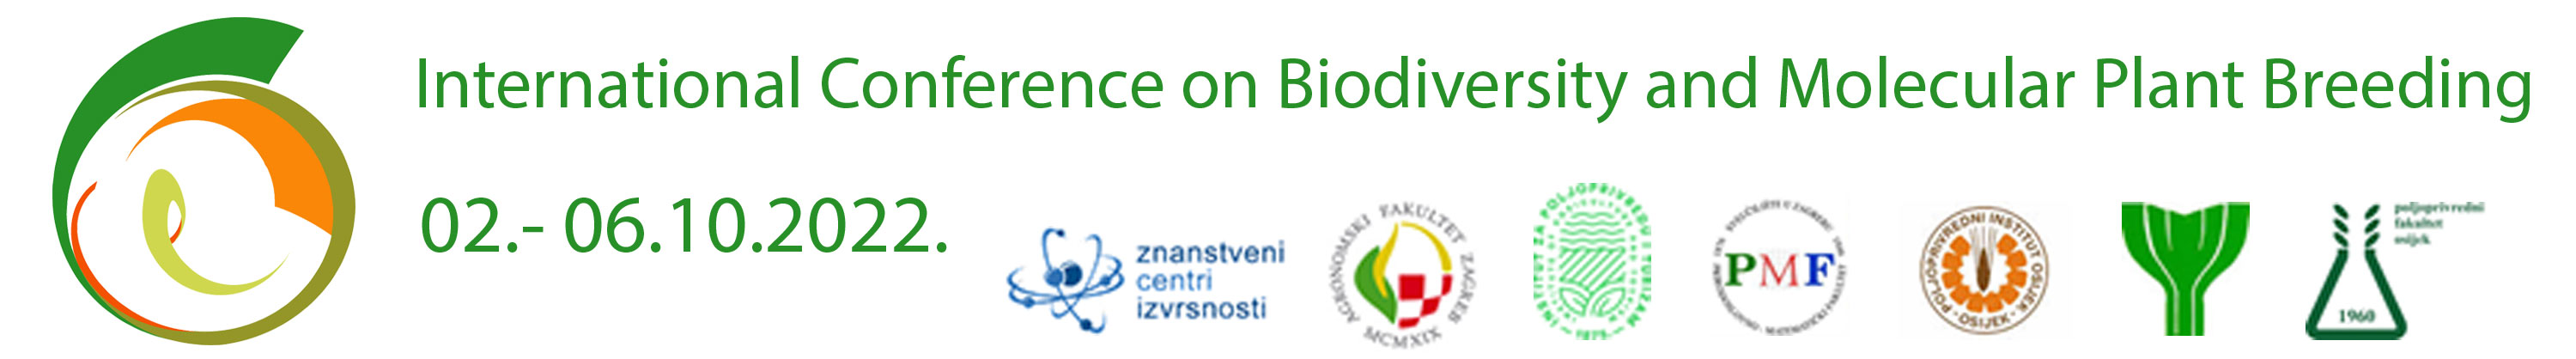 International Conference on Biodiversity and Molecular Plant Breeding 